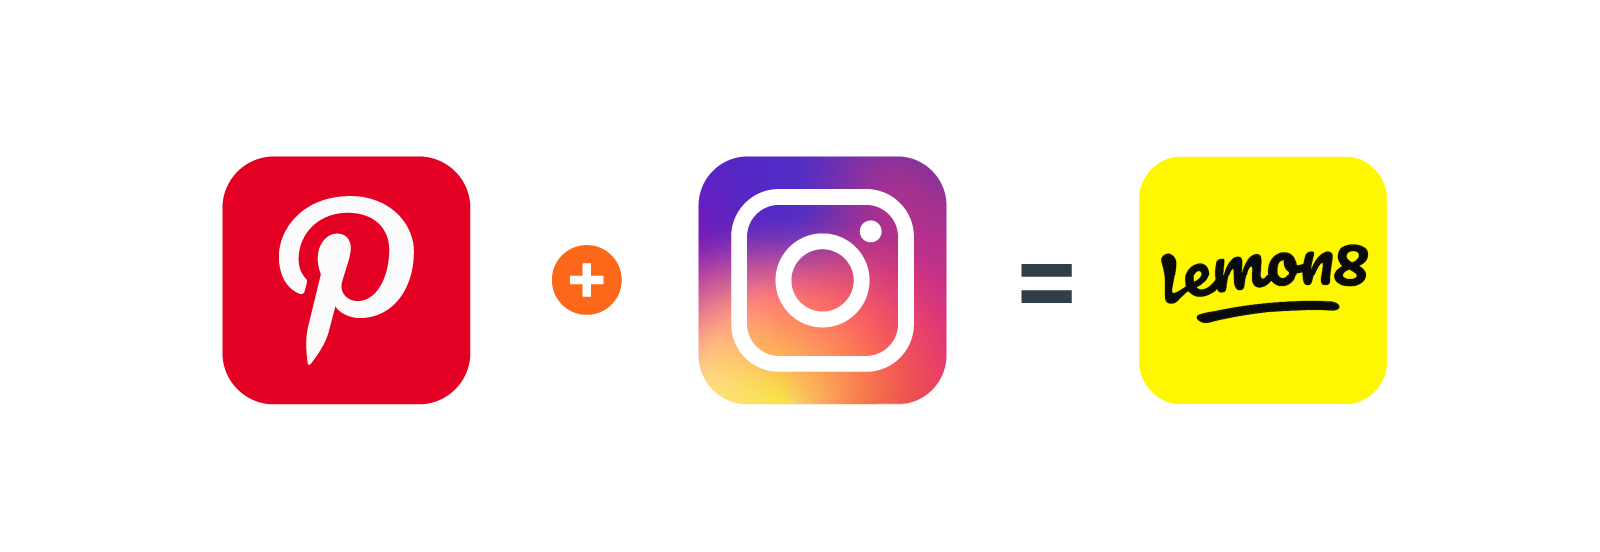 Pinterest logo, plus sign, Instagram logo, equal sign, Lemon8 logo